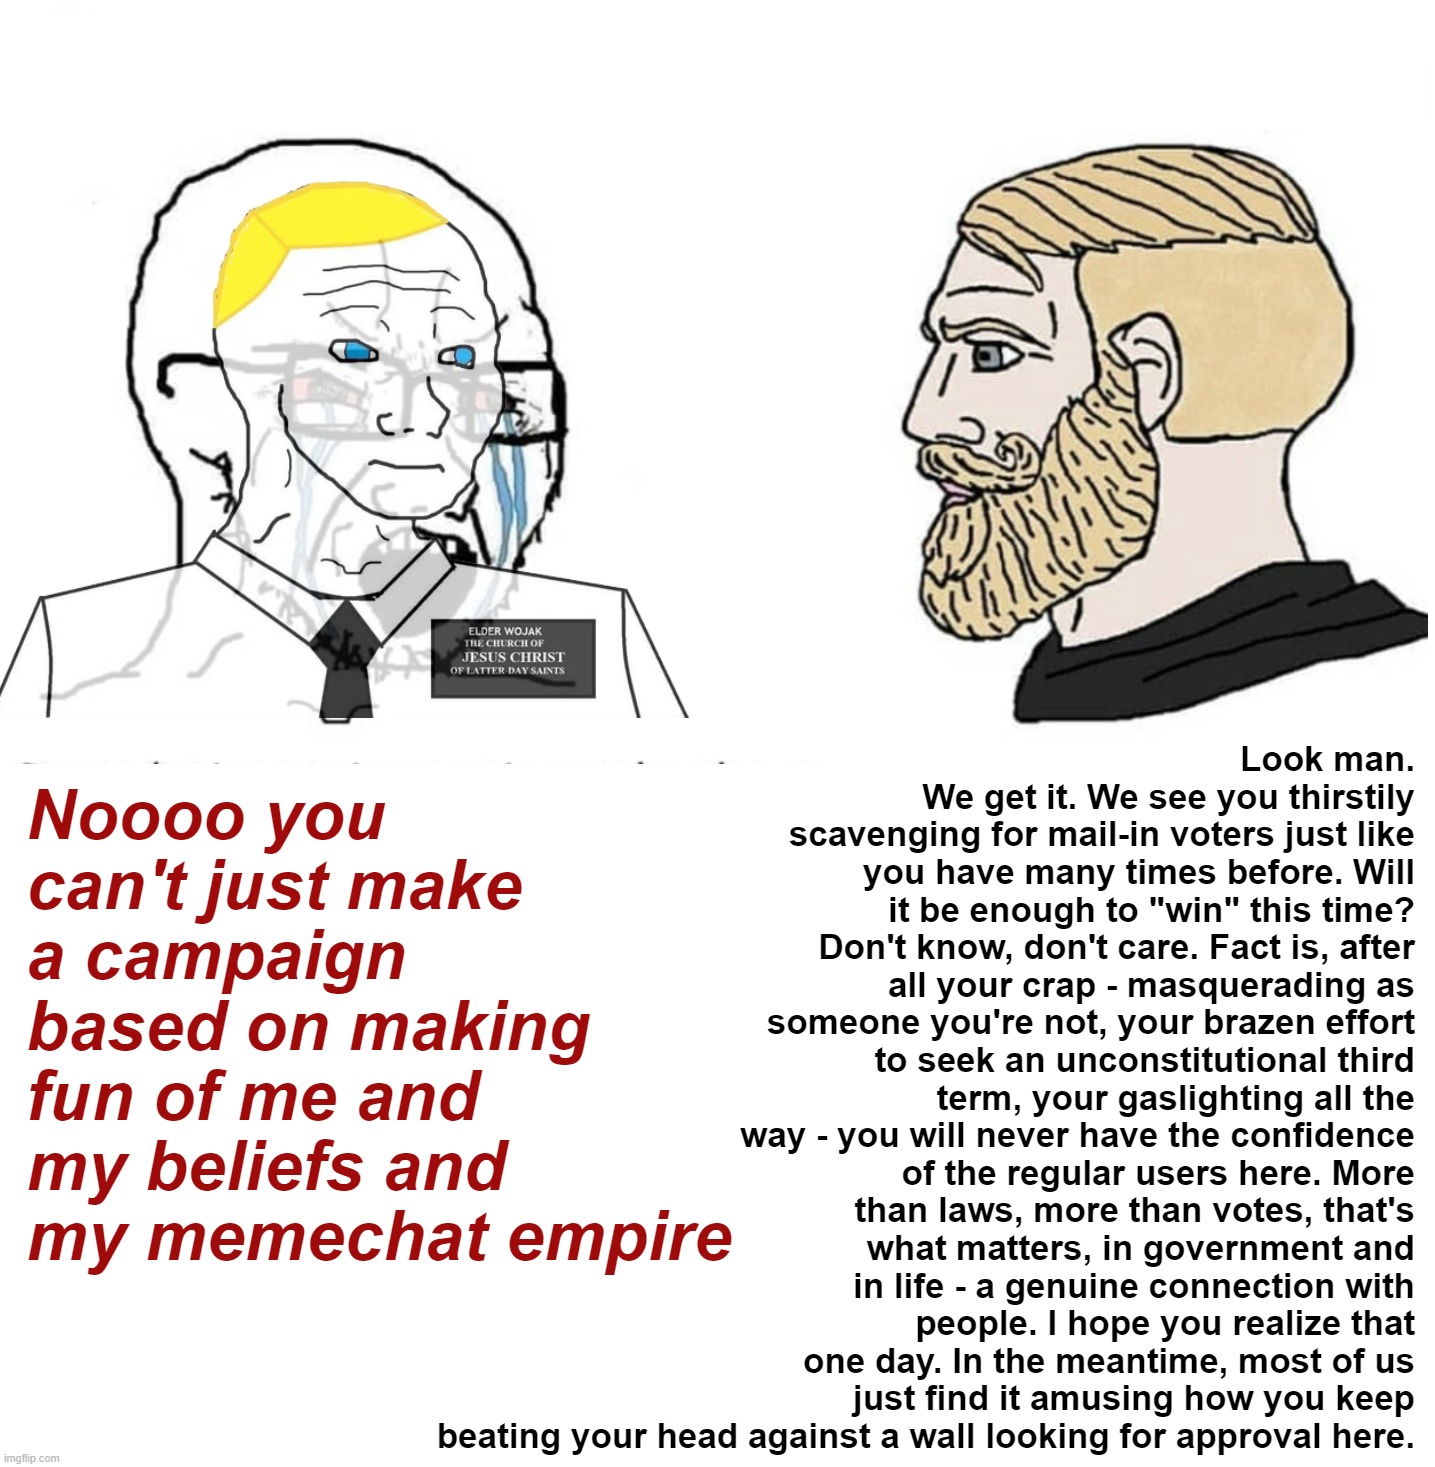 The Chad Meme Maker vs. the [REDACTED] : r/memes